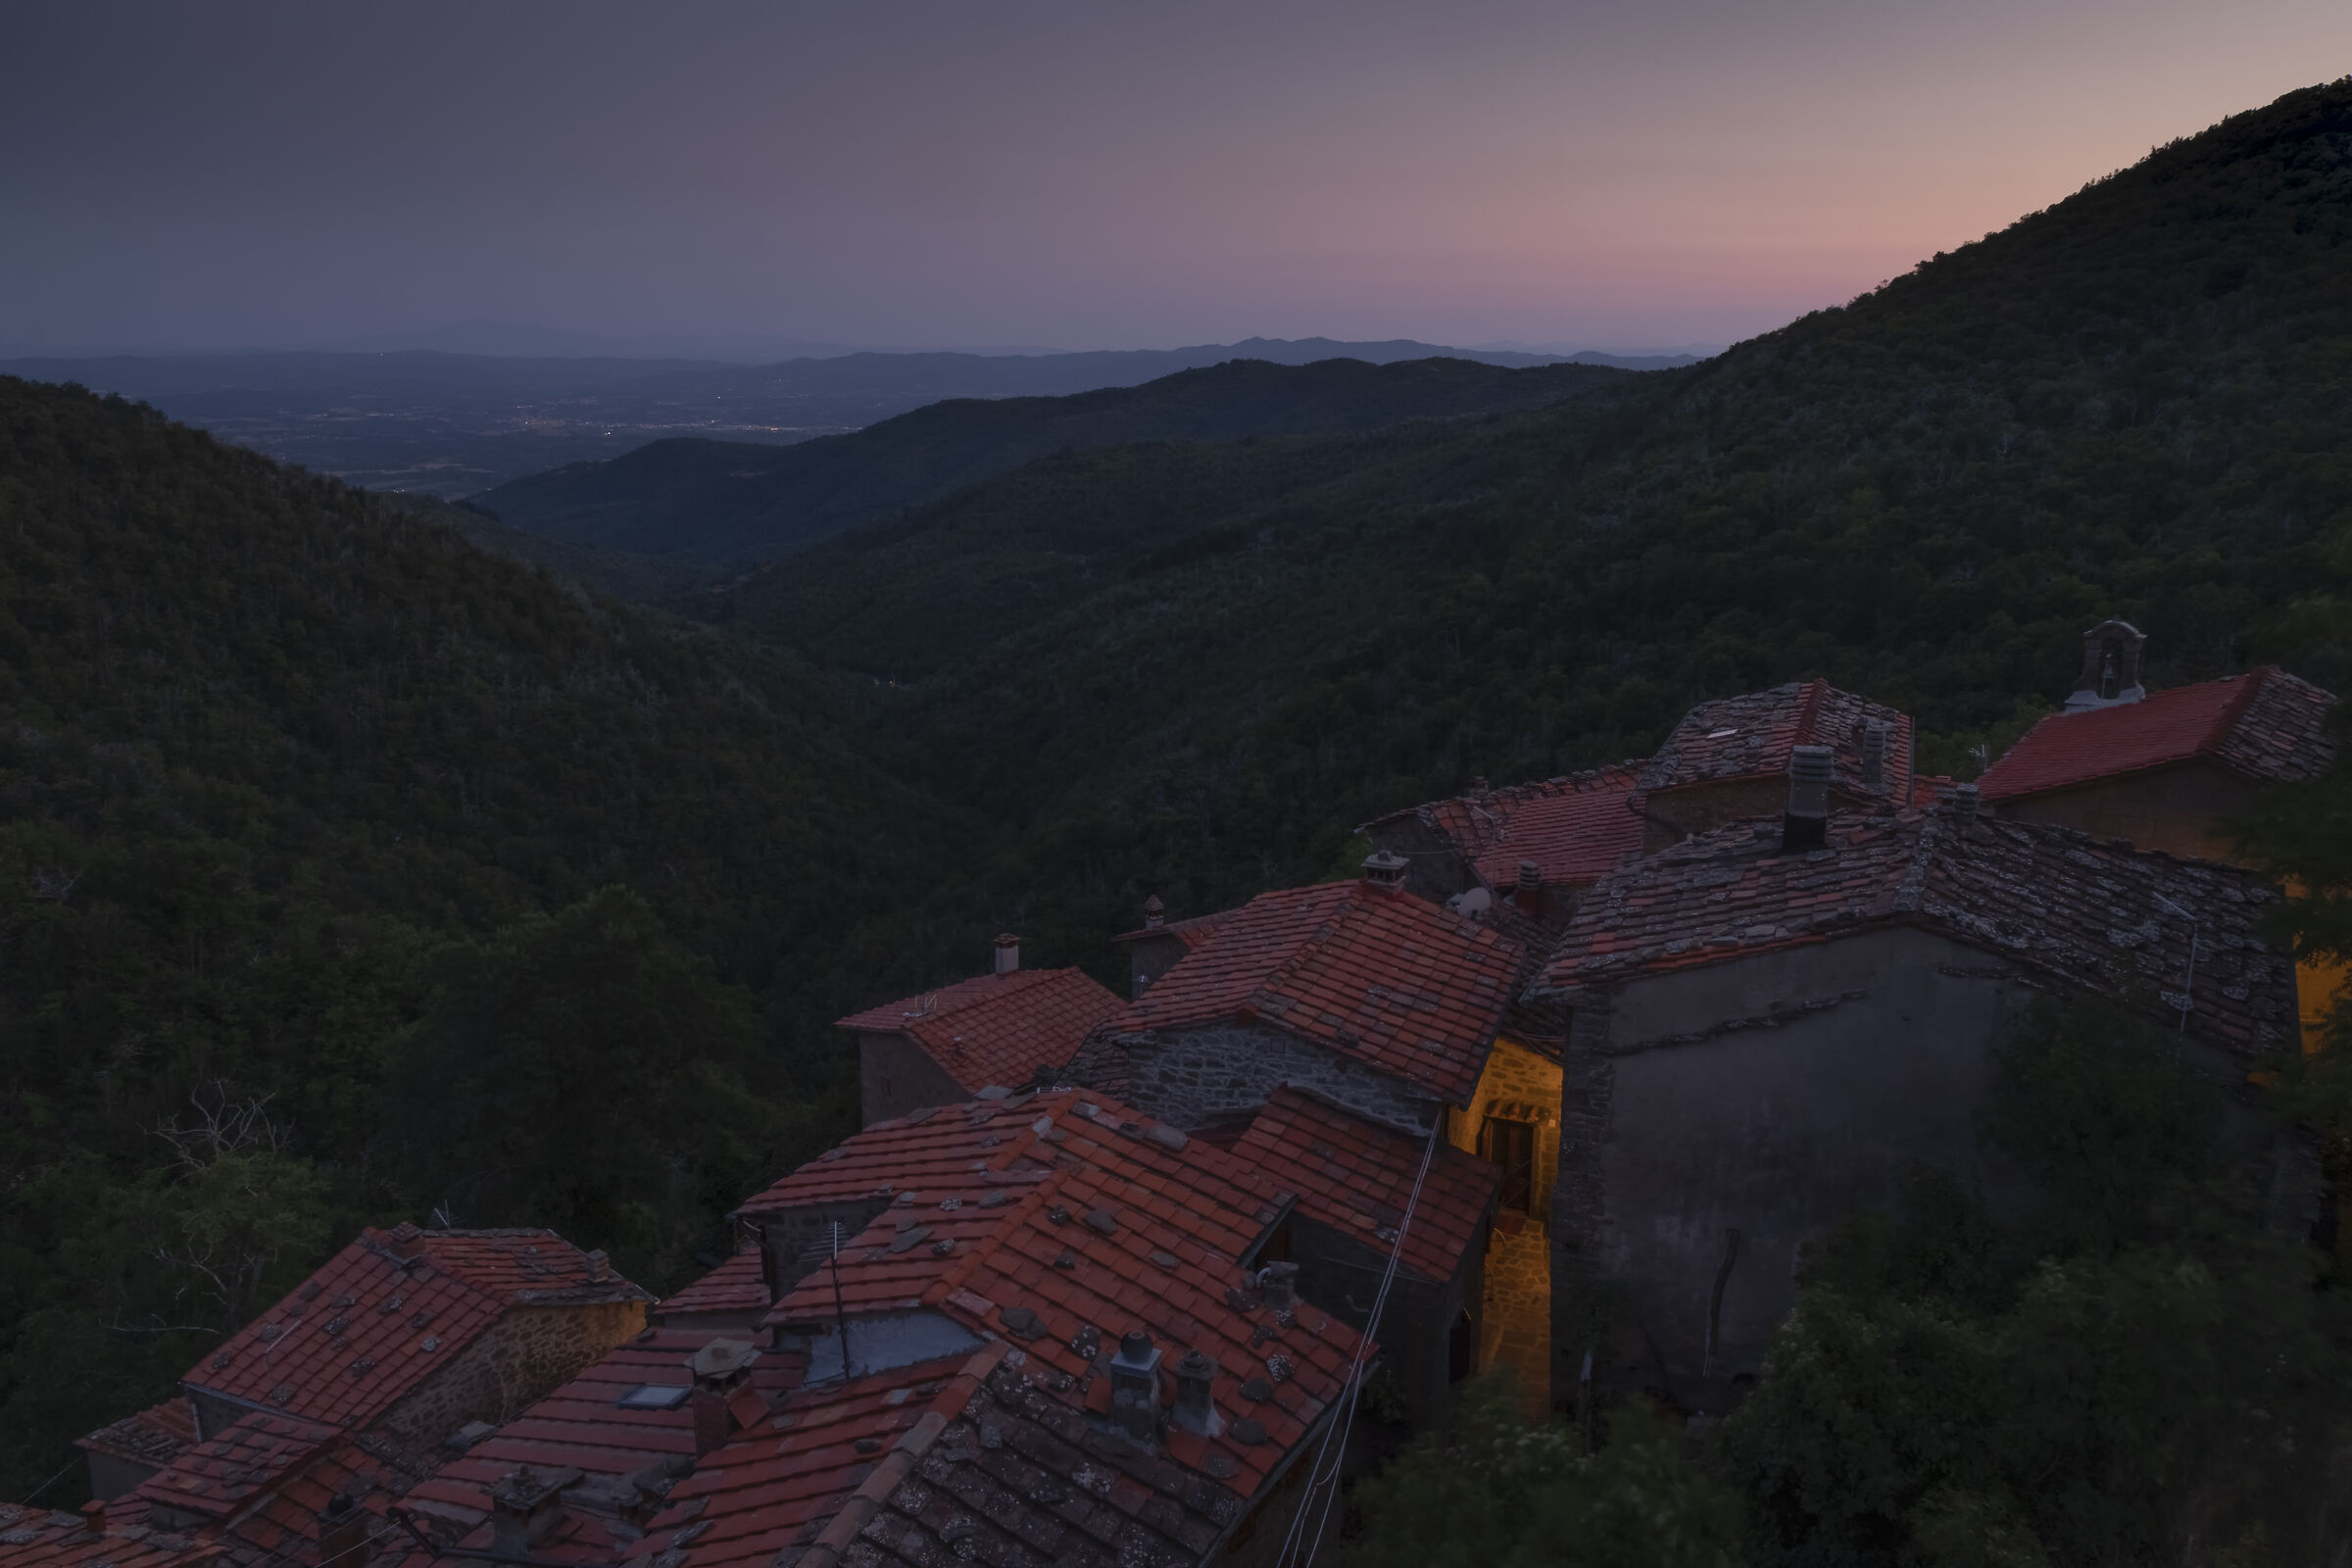 Among the roofs of Rocca Ricciarda (Tuscany)...